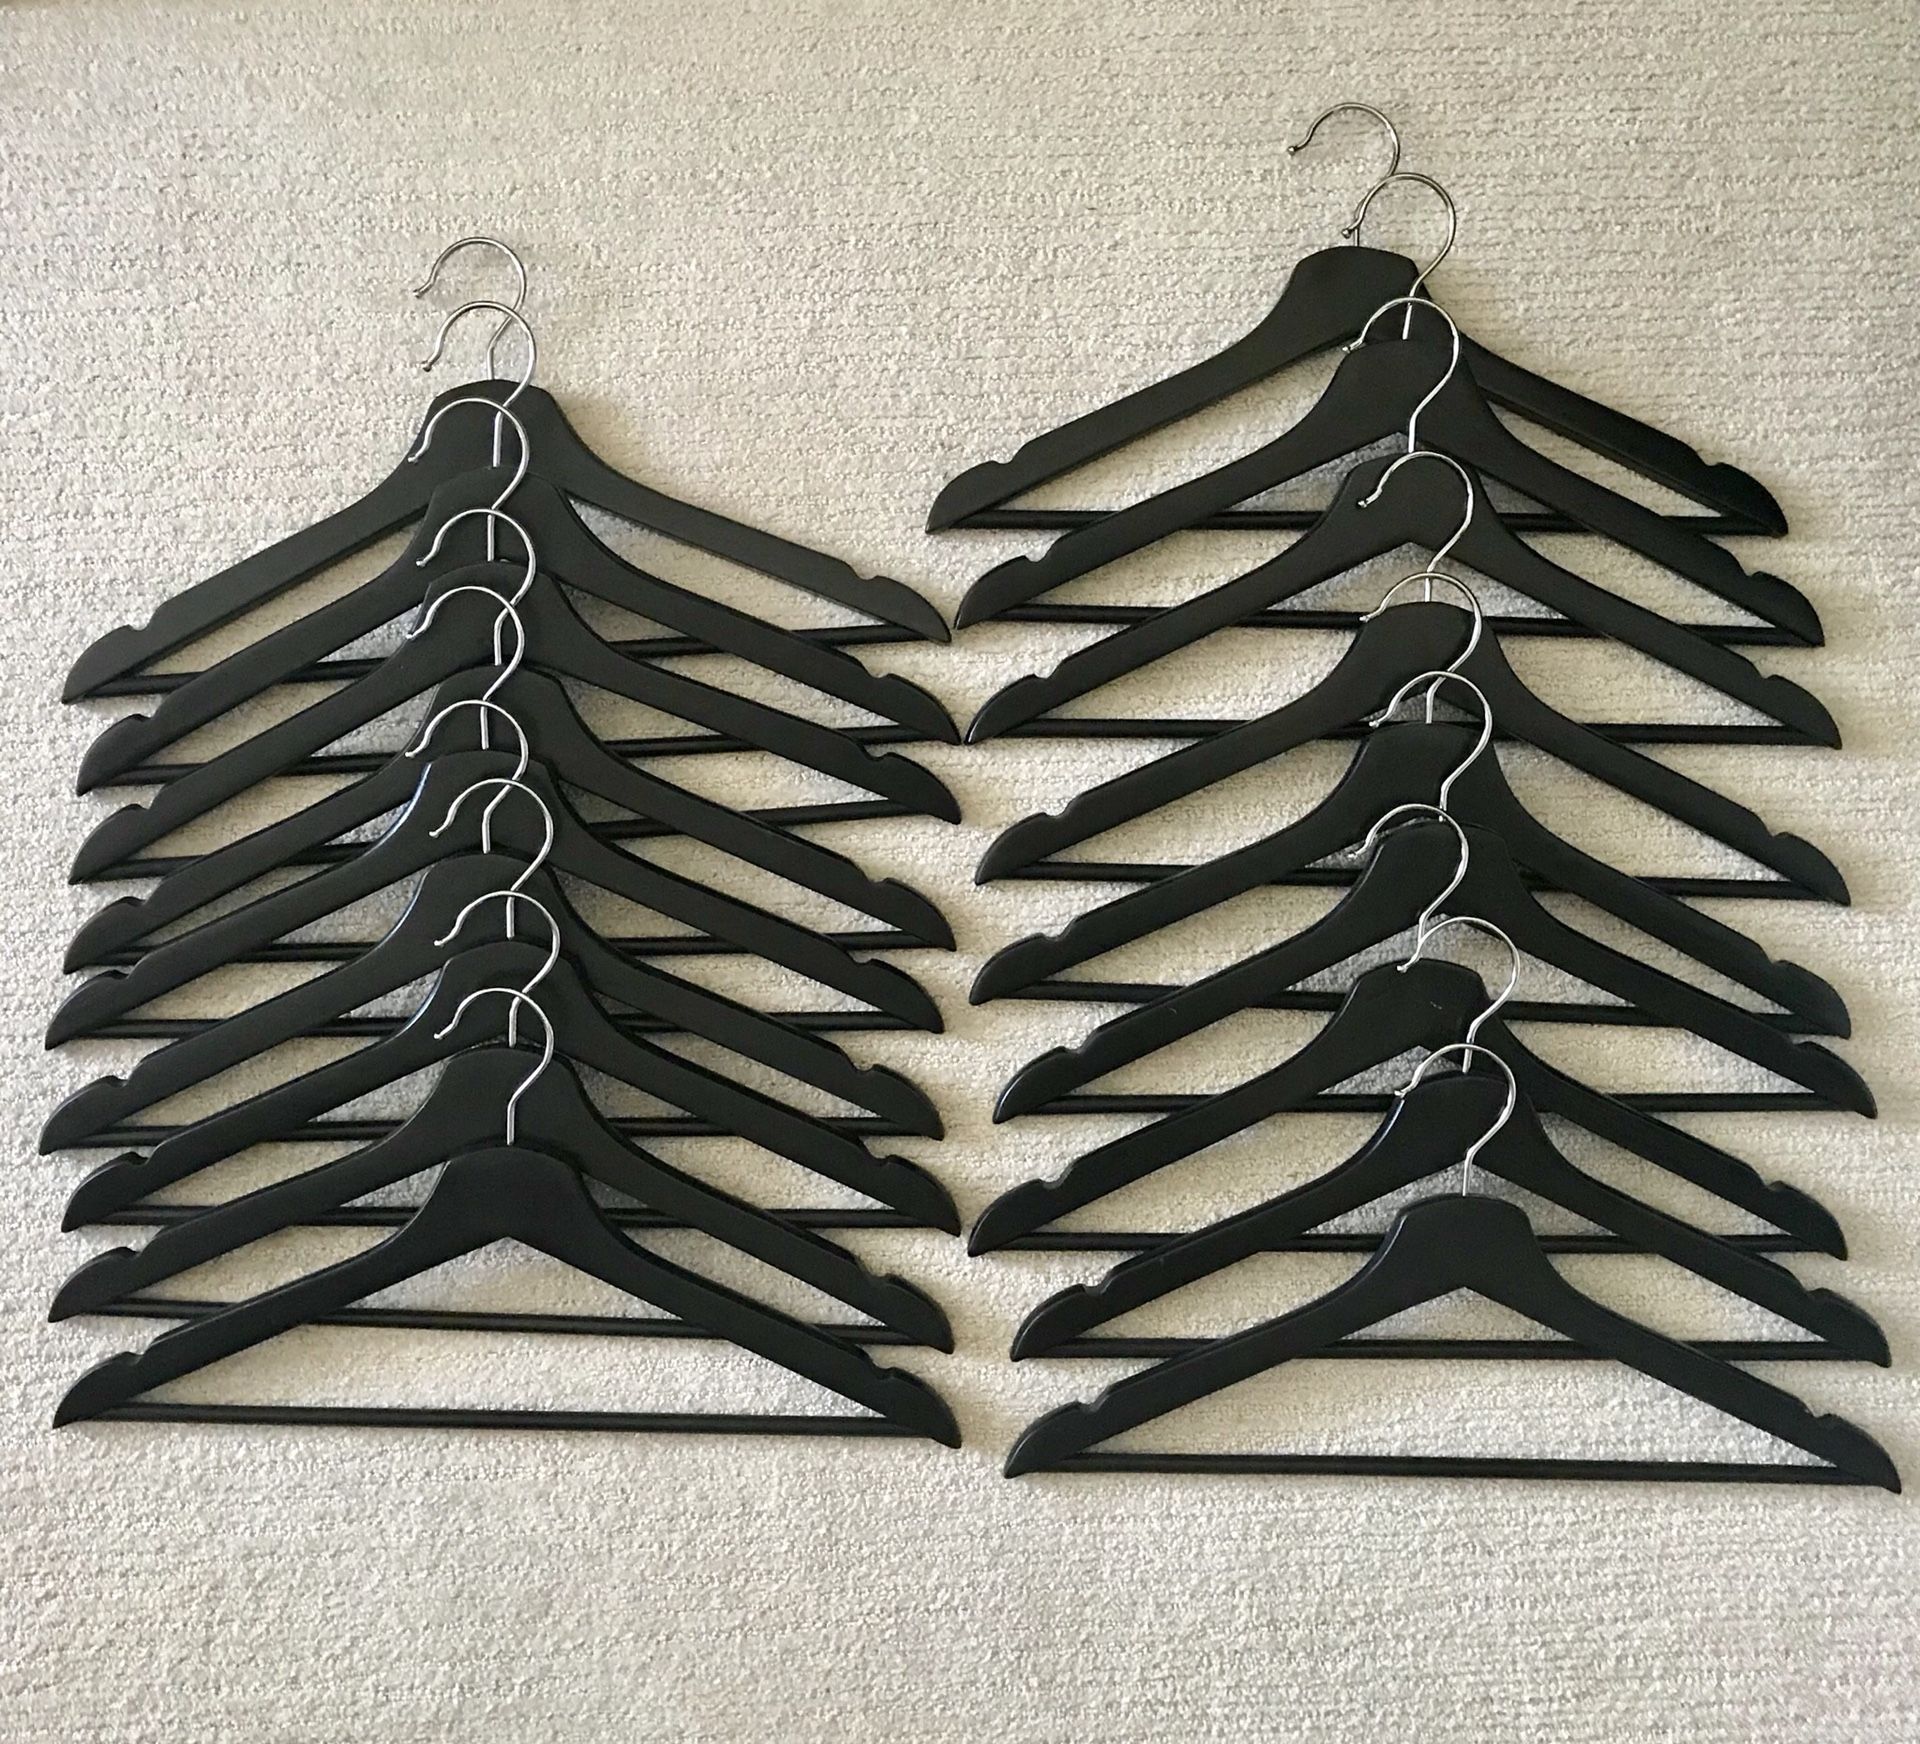 18 wooden quality hangers (black)